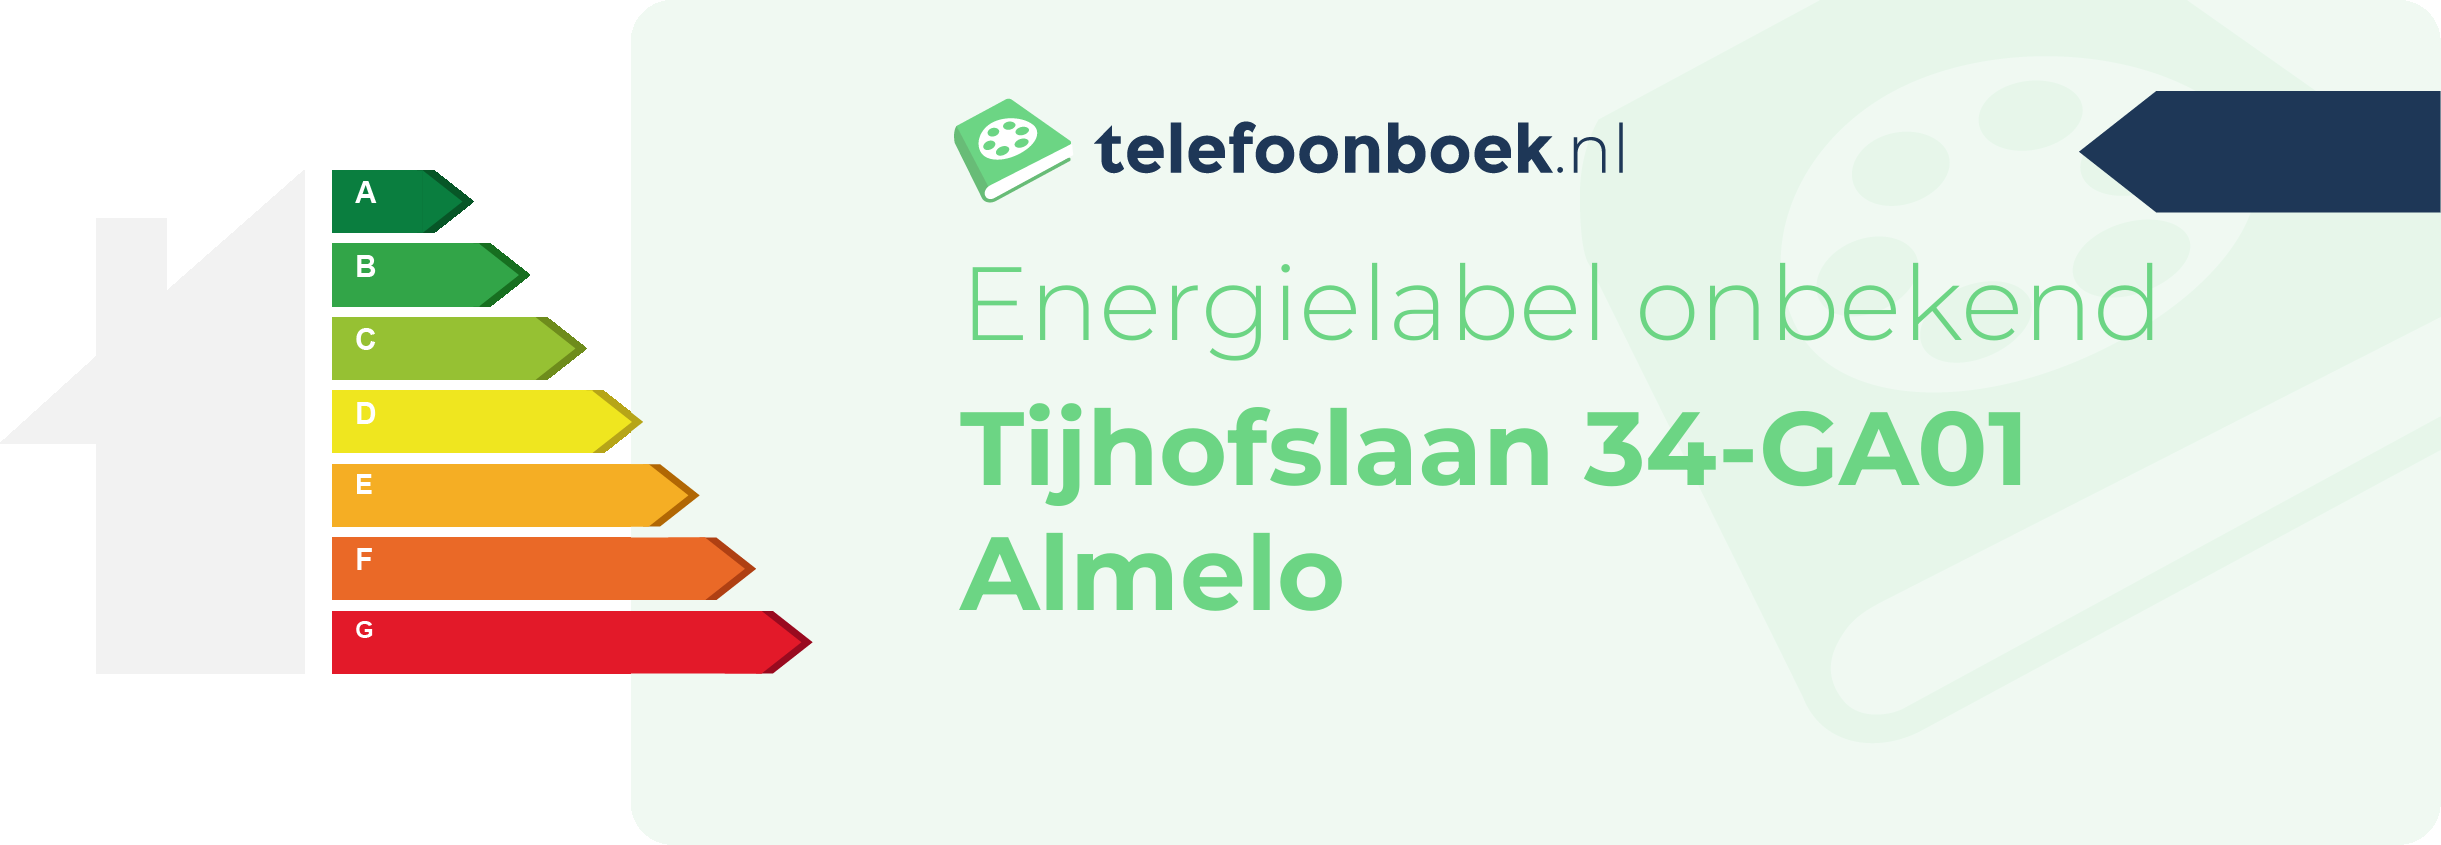 Energielabel Tijhofslaan 34-GA01 Almelo